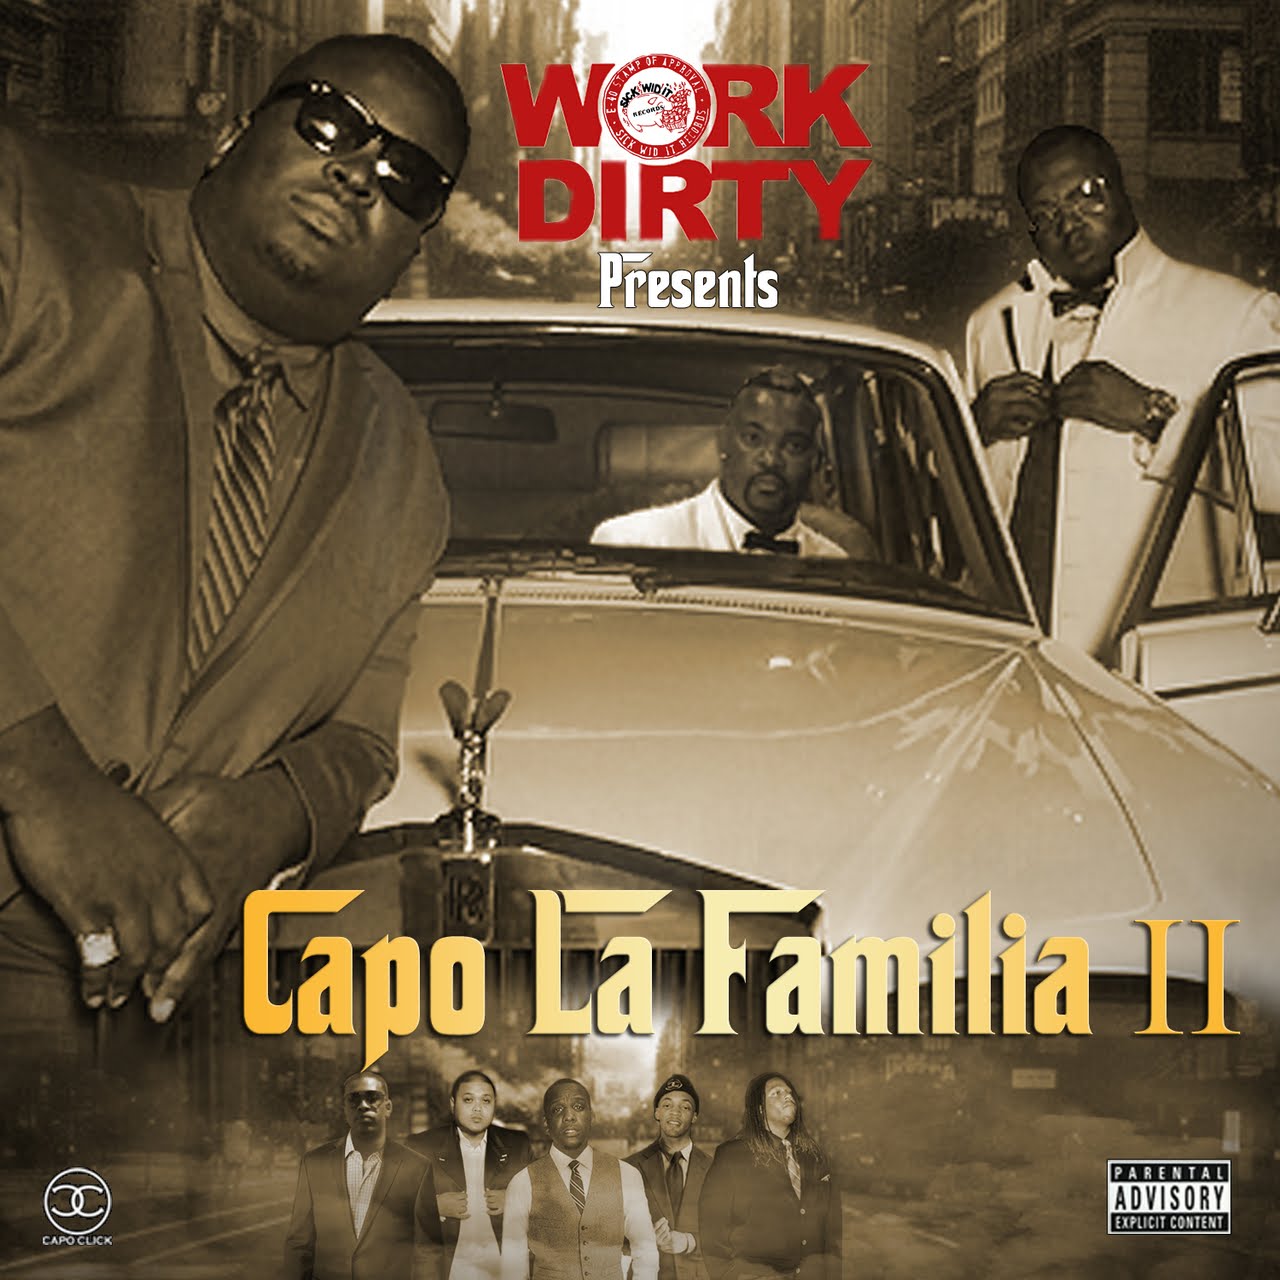 Work Dirty - "Capo La Familia II" (Album Stream)